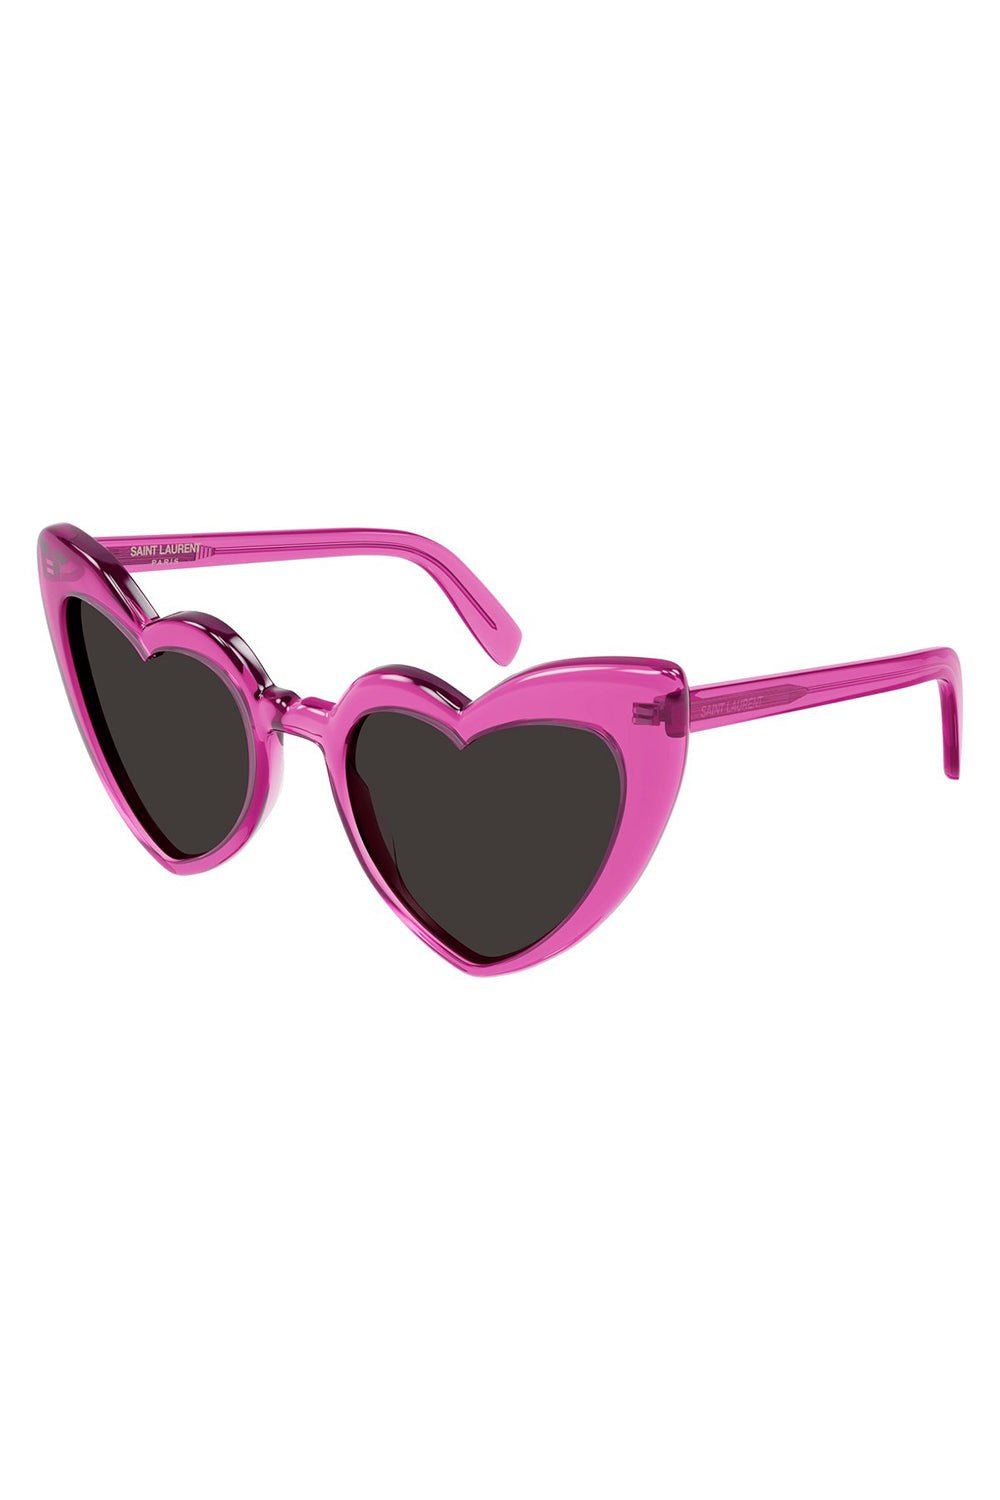 SAINT LAURENT-Heart Sunglasses-PINK/BLACK